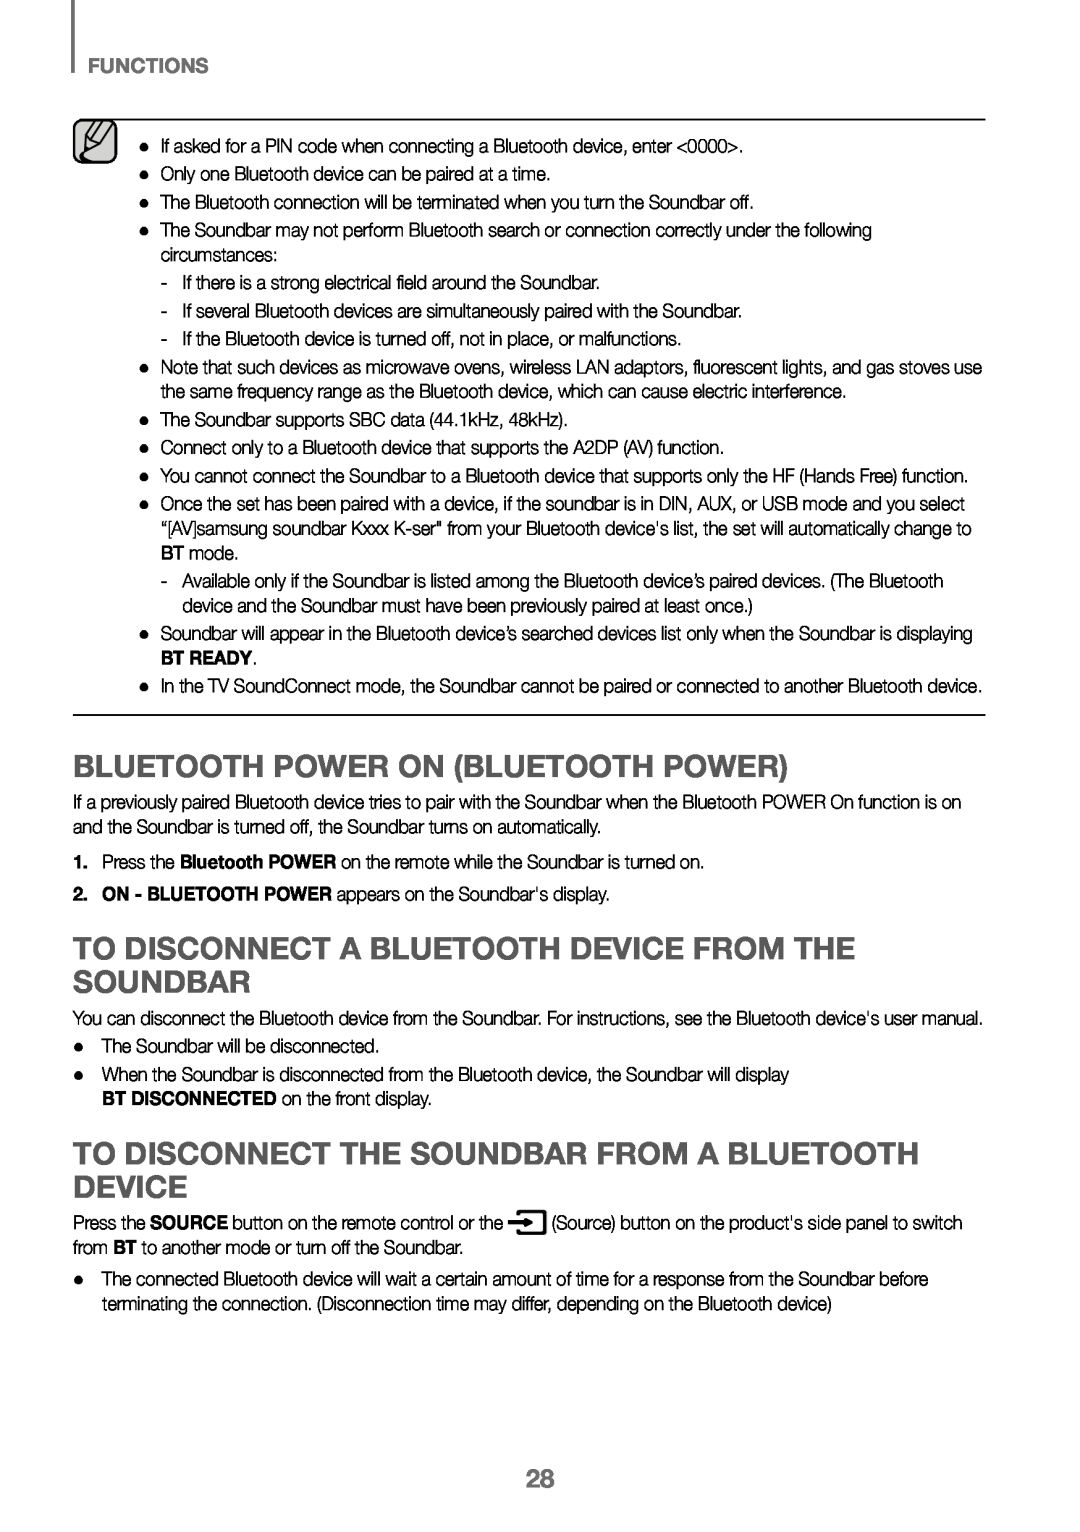 Samsung HW-K450/EN manual Bluetooth Power On Bluetooth Power, To Disconnect A Bluetooth Device From The Soundbar, Functions 